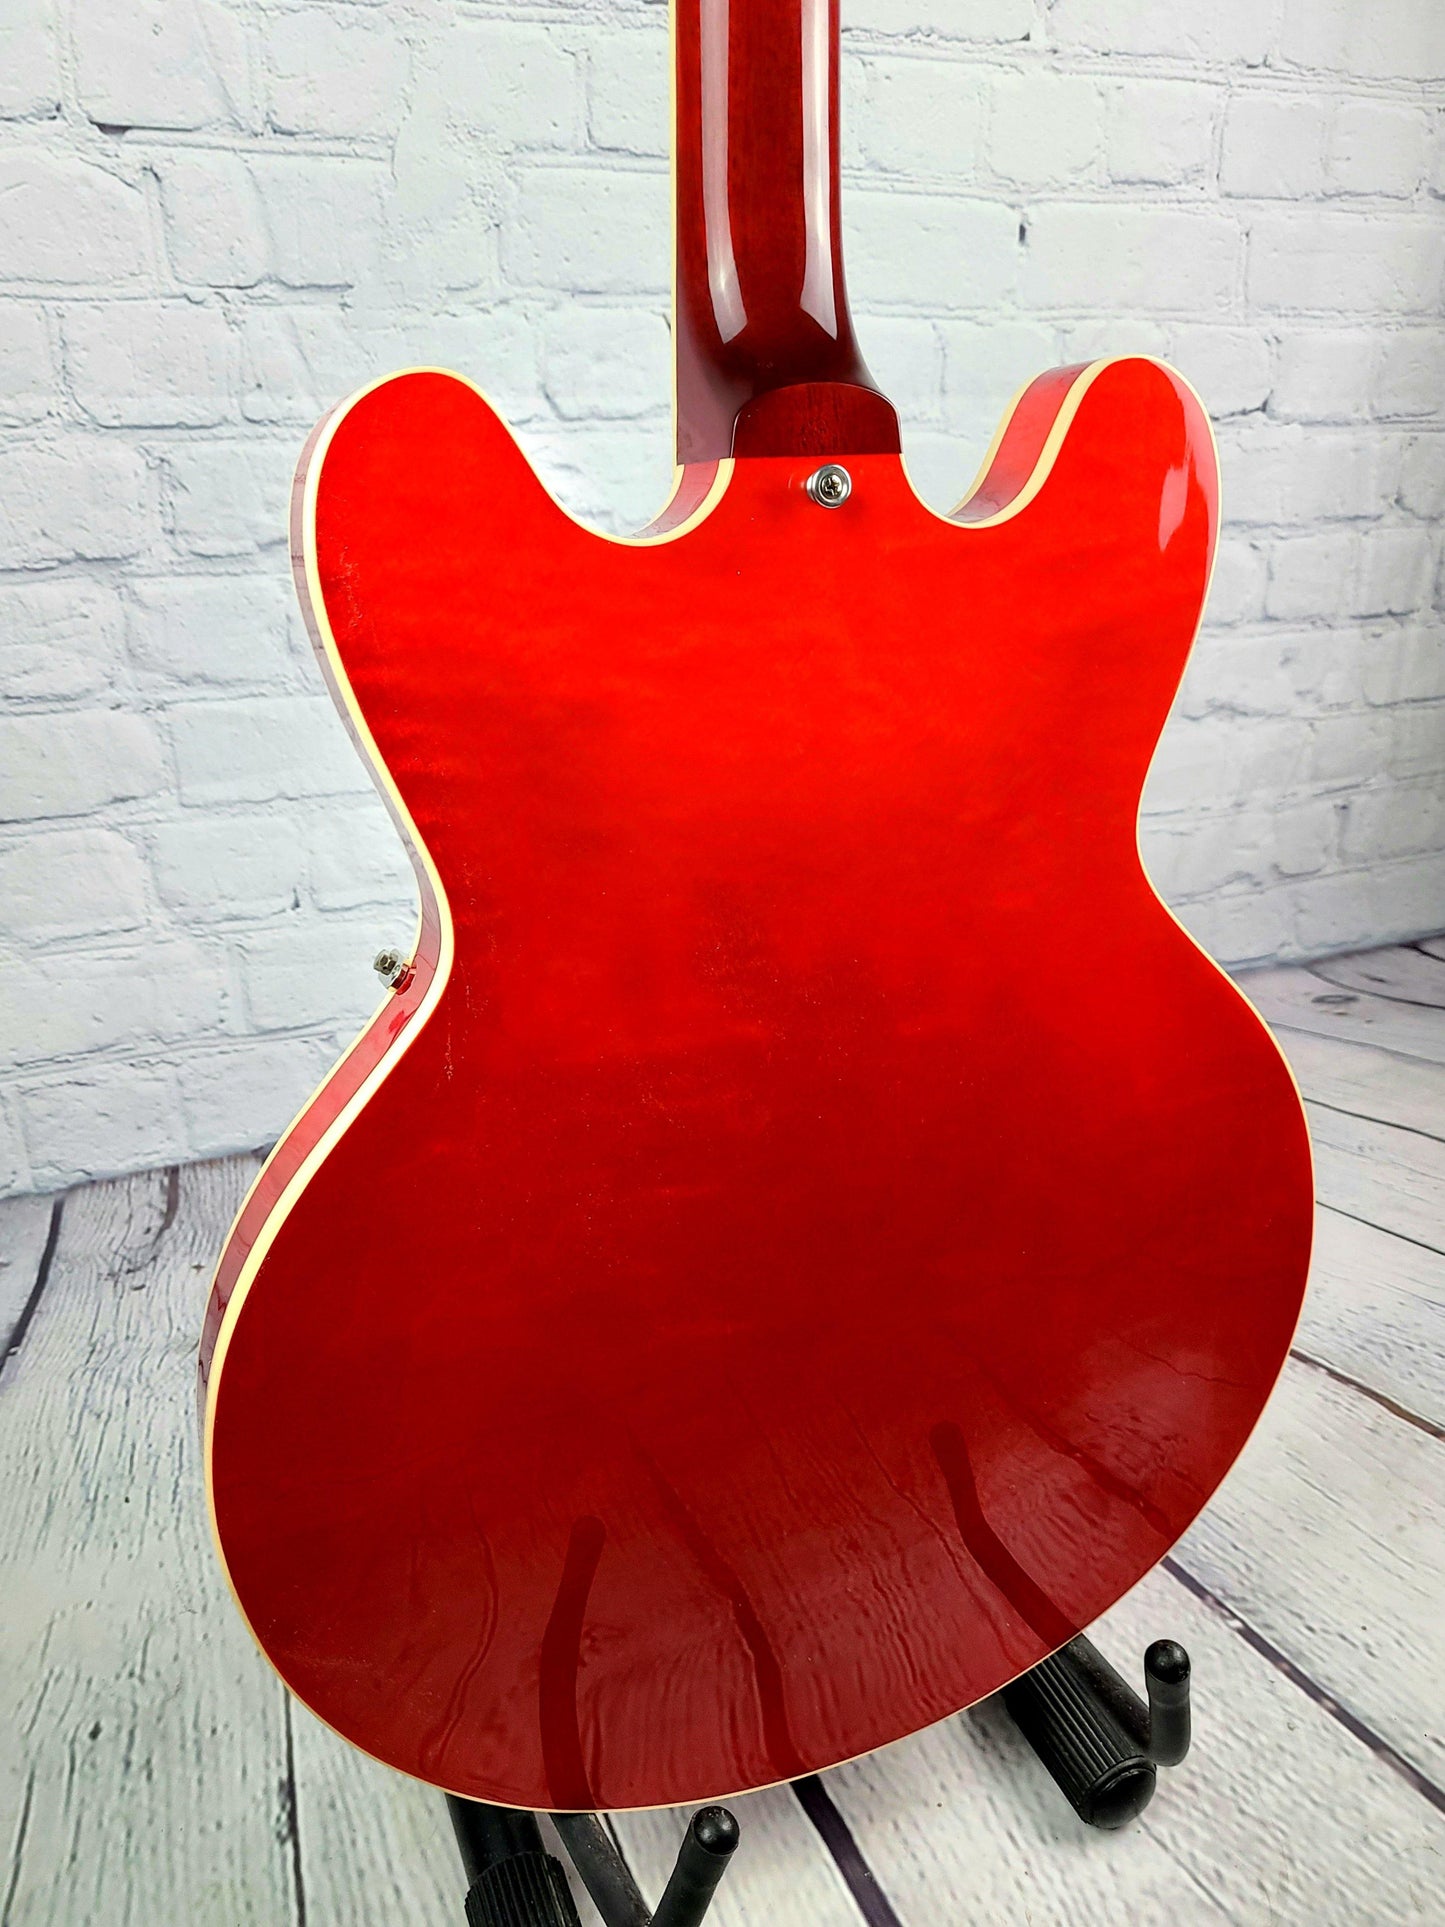 Heritage Standard H-535 Semi-Hollow Guitar Trans Cherry Burst - Guitar Brando